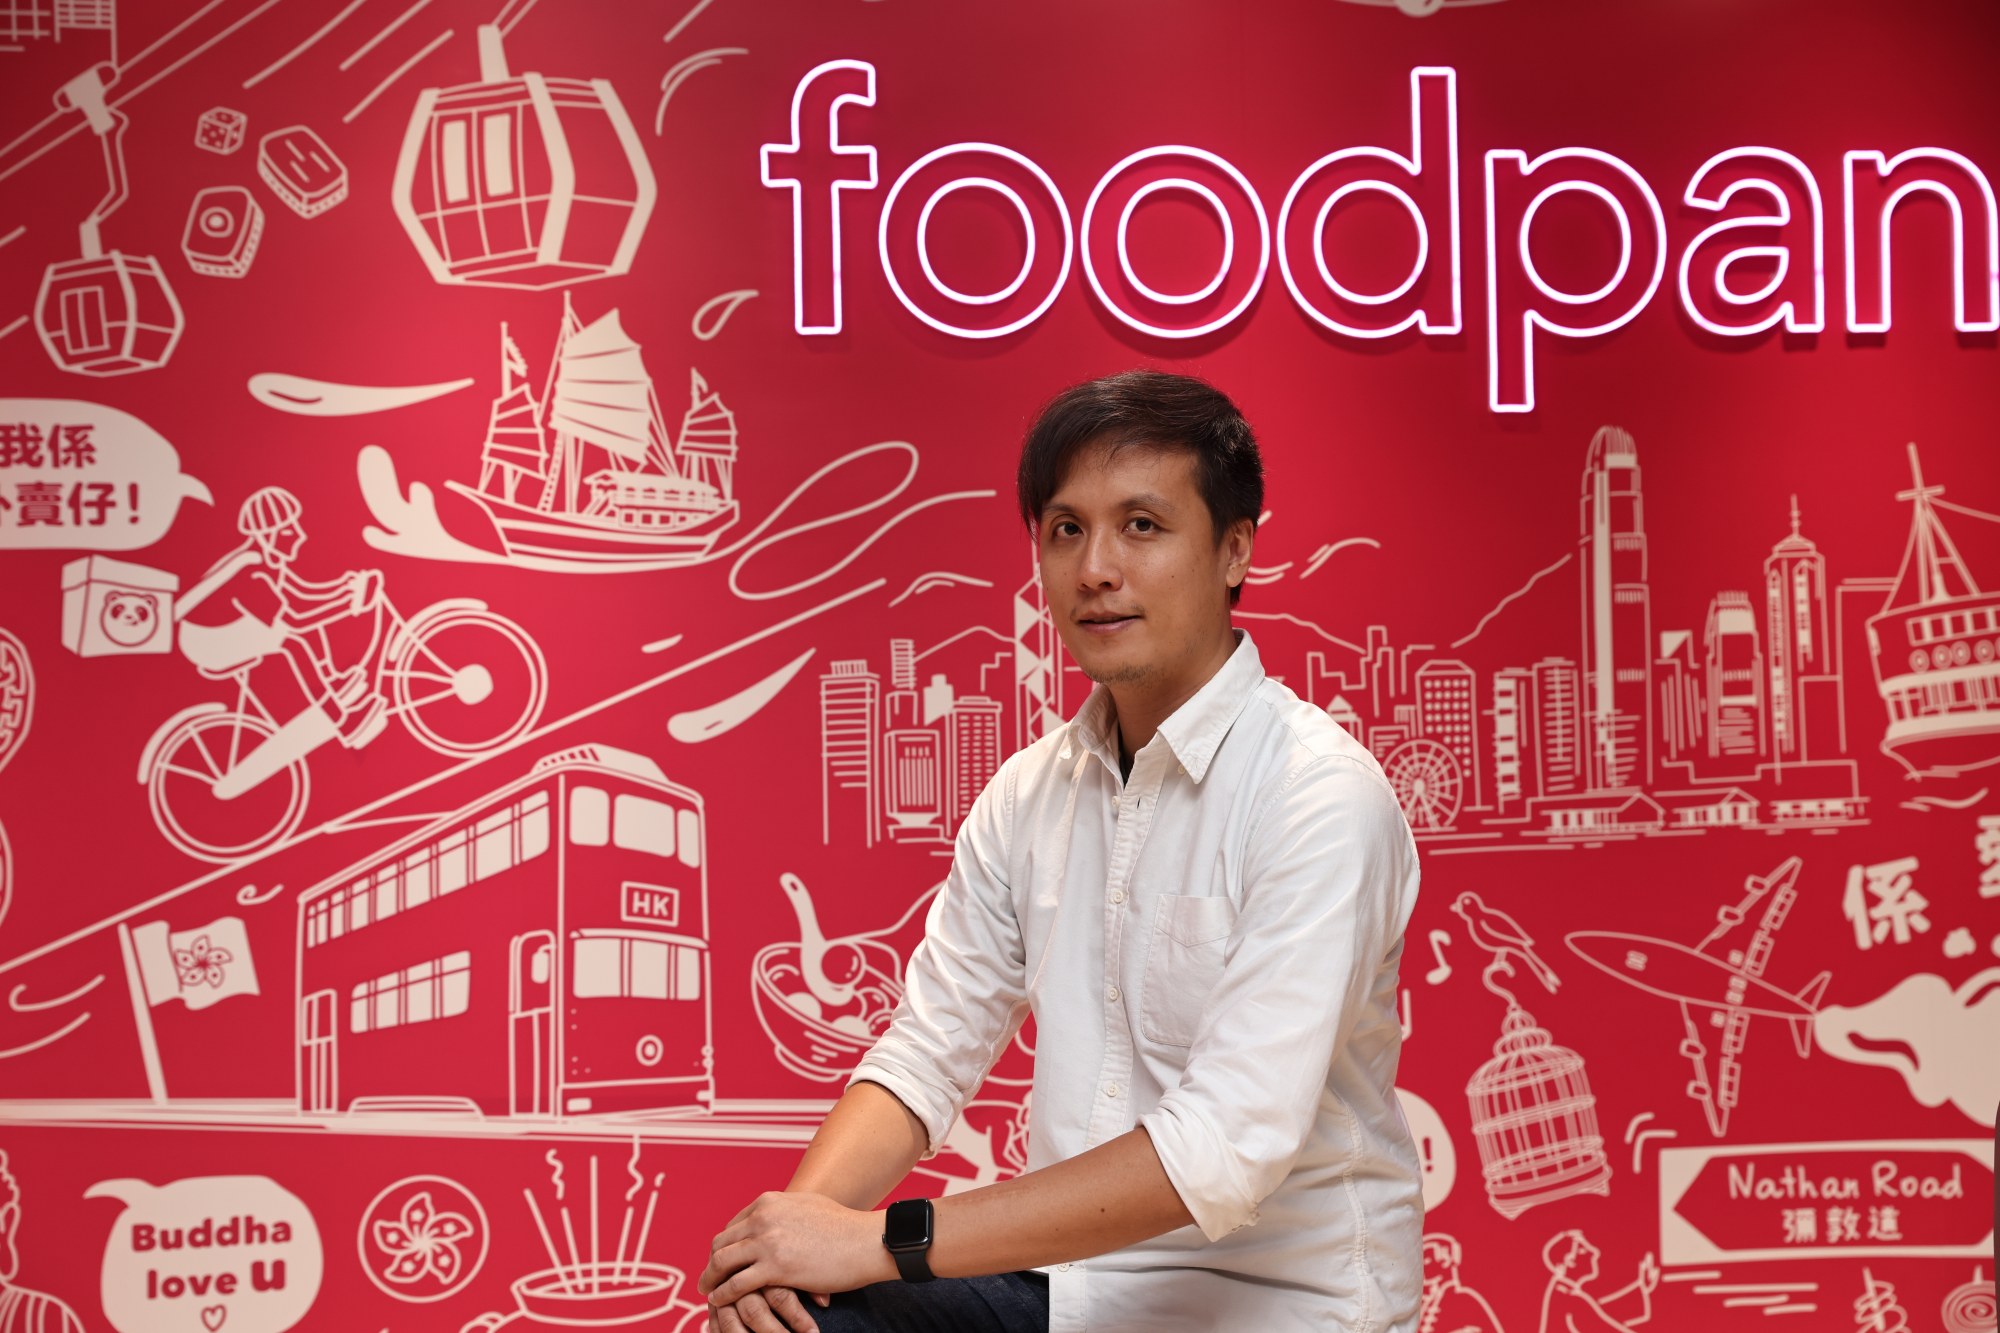 Foodpanda managing director Ryan Lai. Photo: K. Y. Cheng